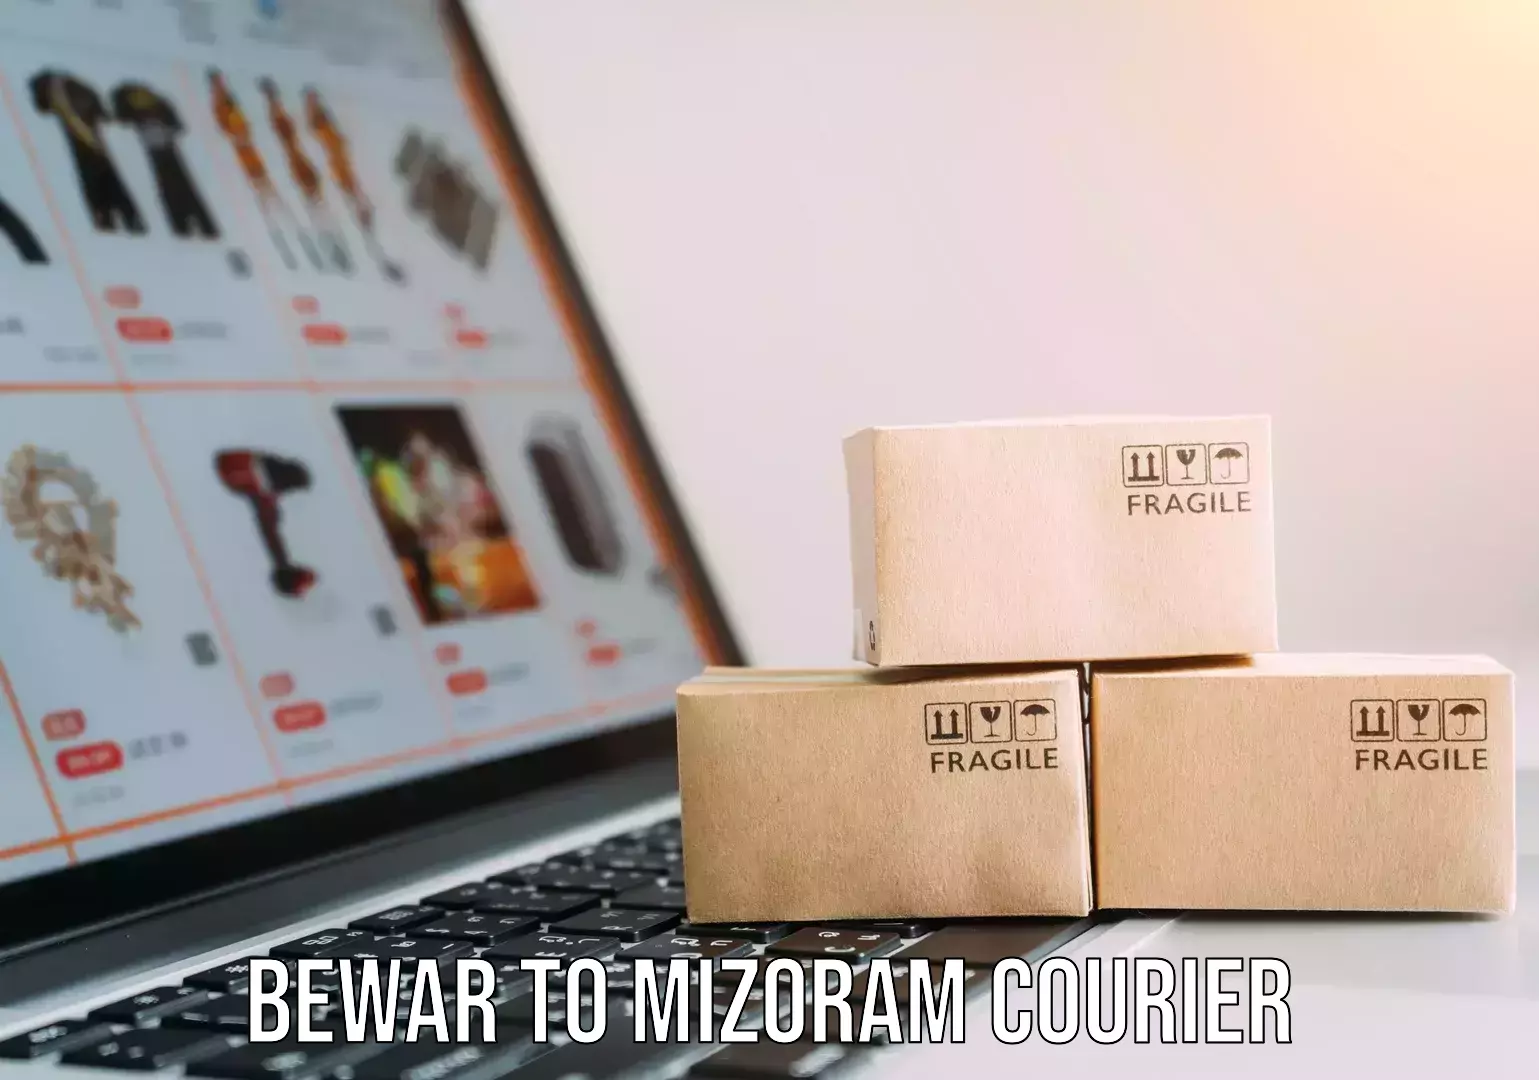 24/7 courier service Bewar to Mizoram